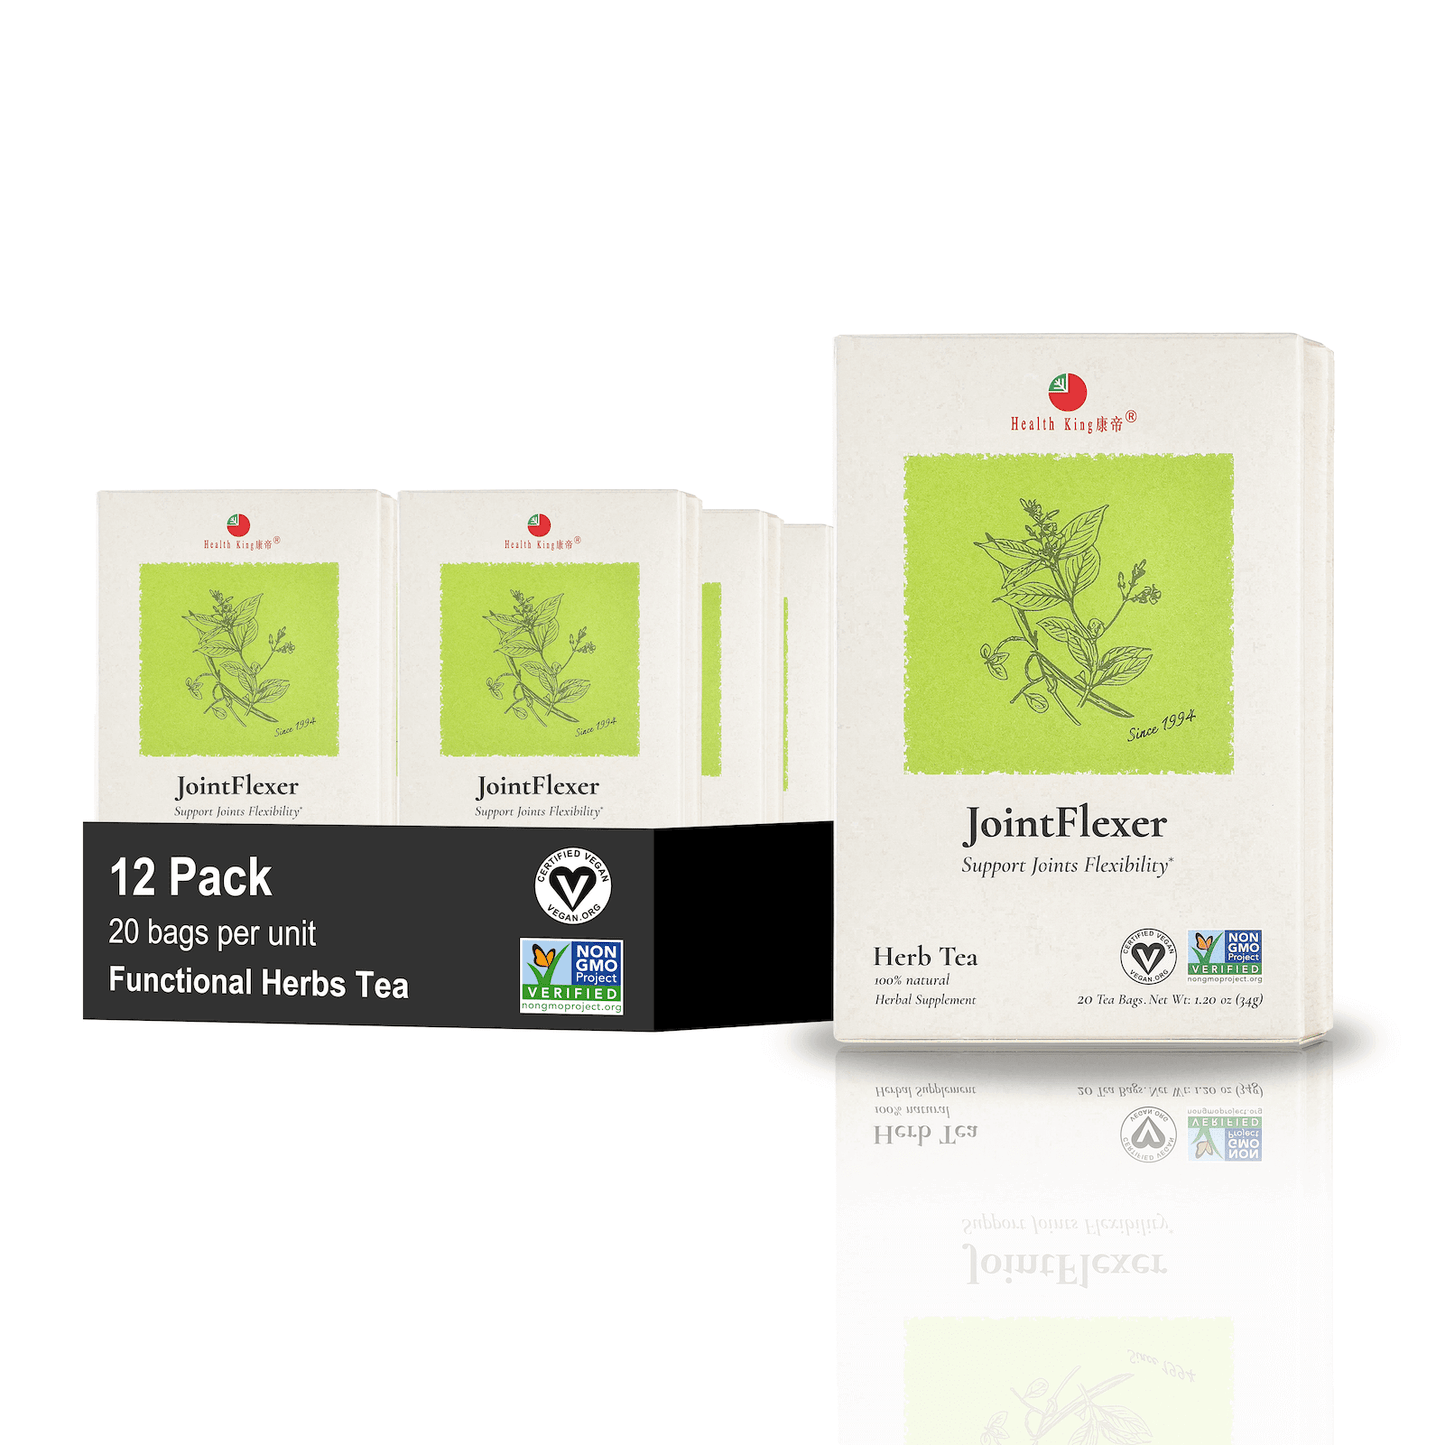 Twelve-pack set of JointFlexer Herb Tea, formulated for joint flexibility